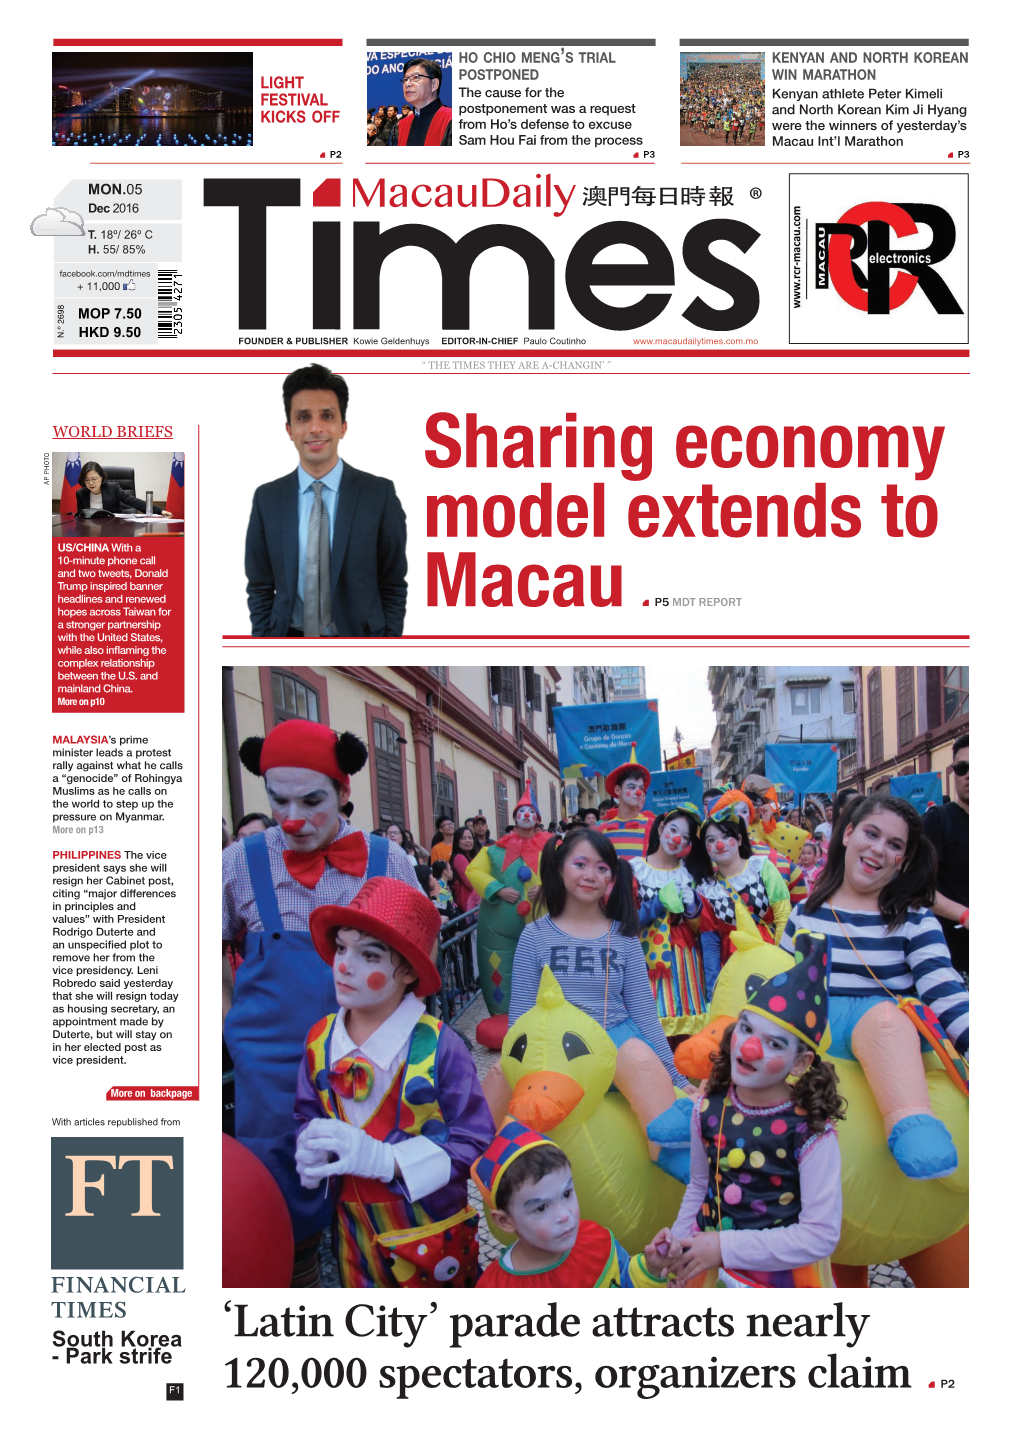 Sharing Economy Model Extends to Macau